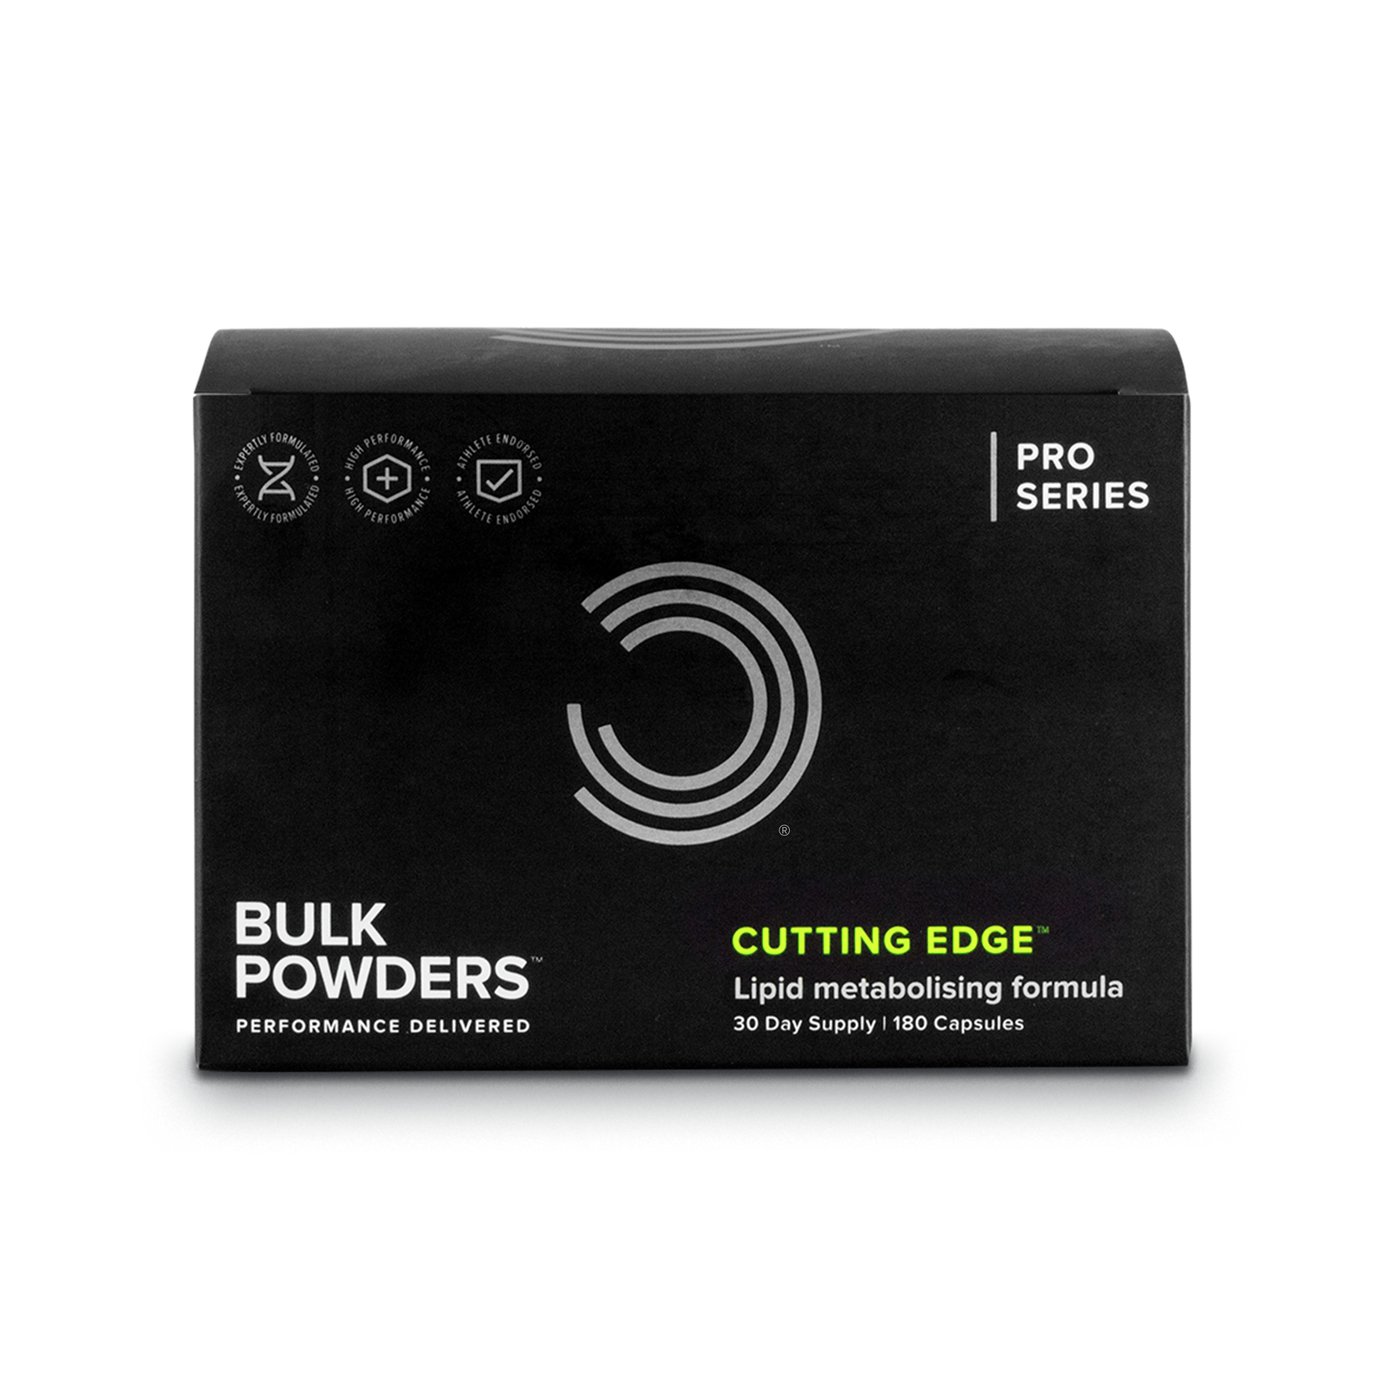 Bulk Powders Pro Series Cutting Edge Capsules x 180 review